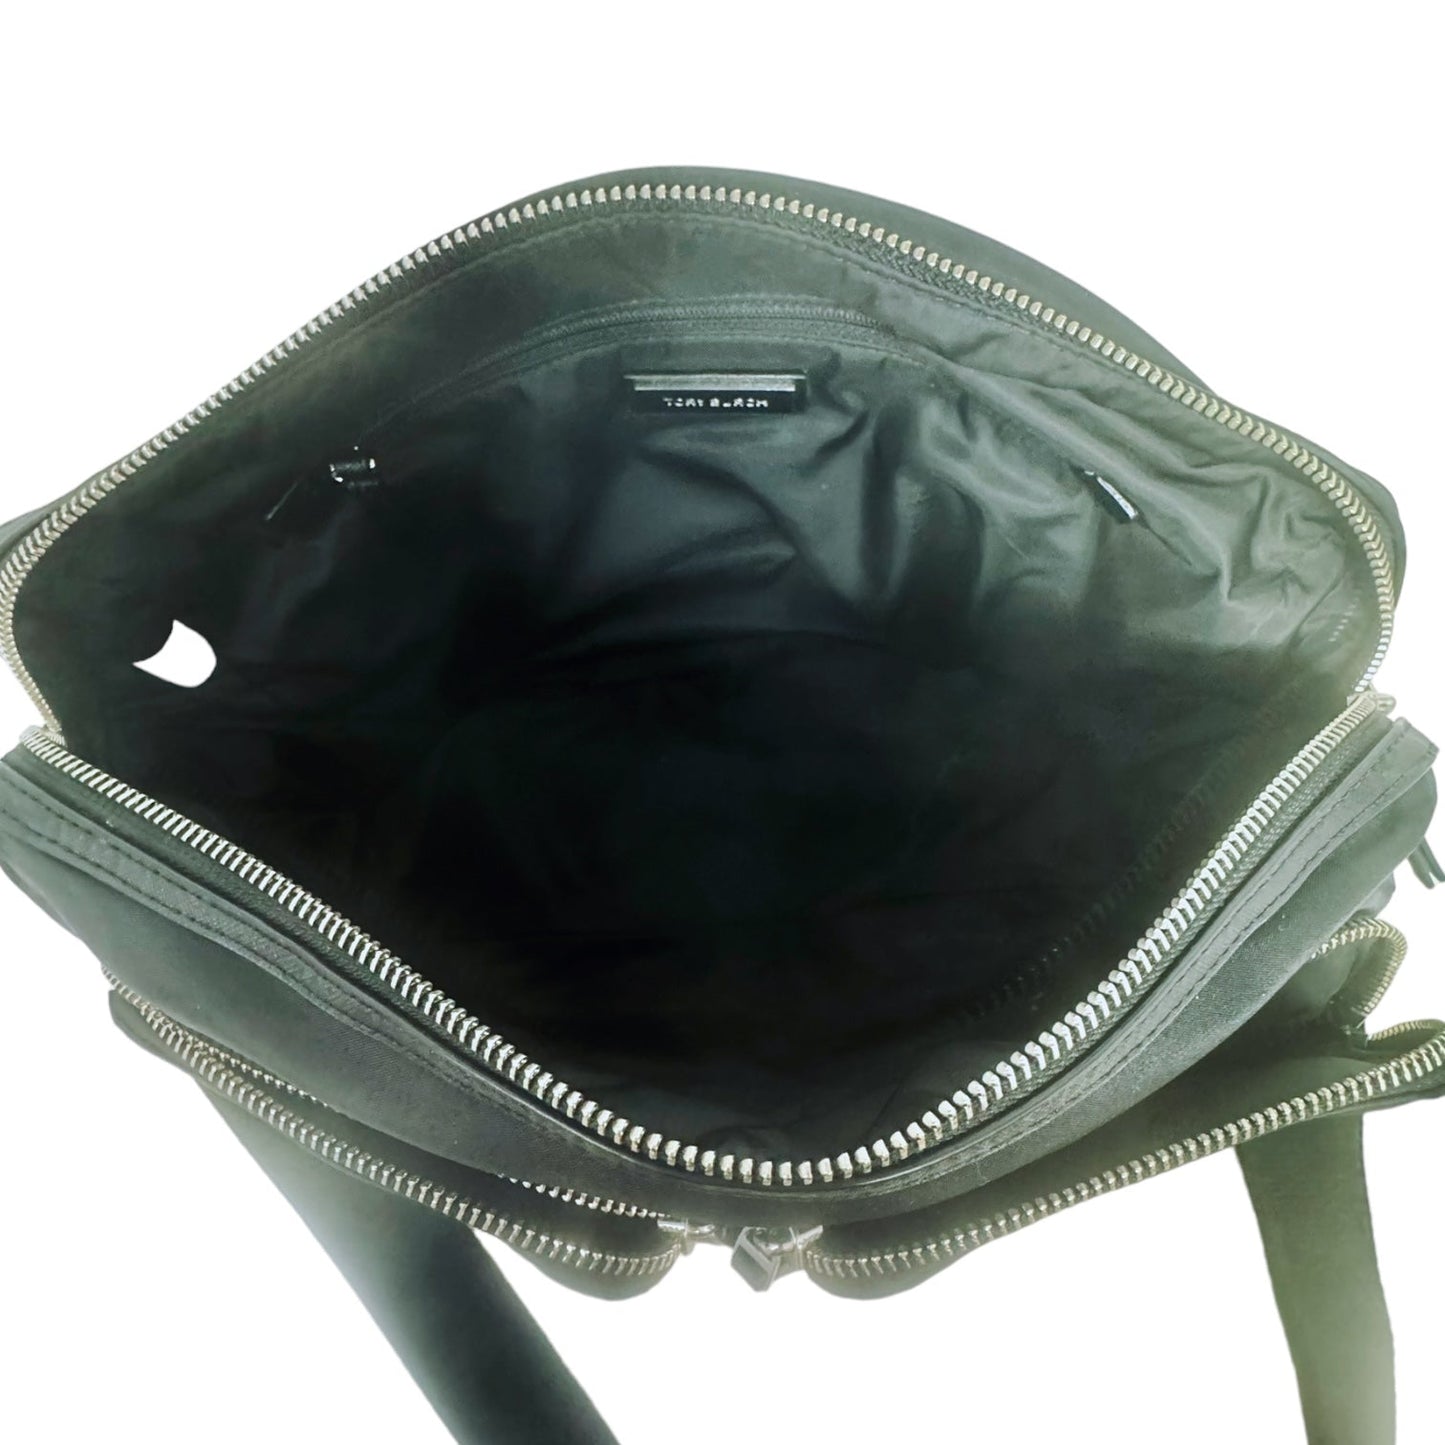 Virginia Recycled Nylon Messenger Bag in Black Designer Tory Burch, Size Medium